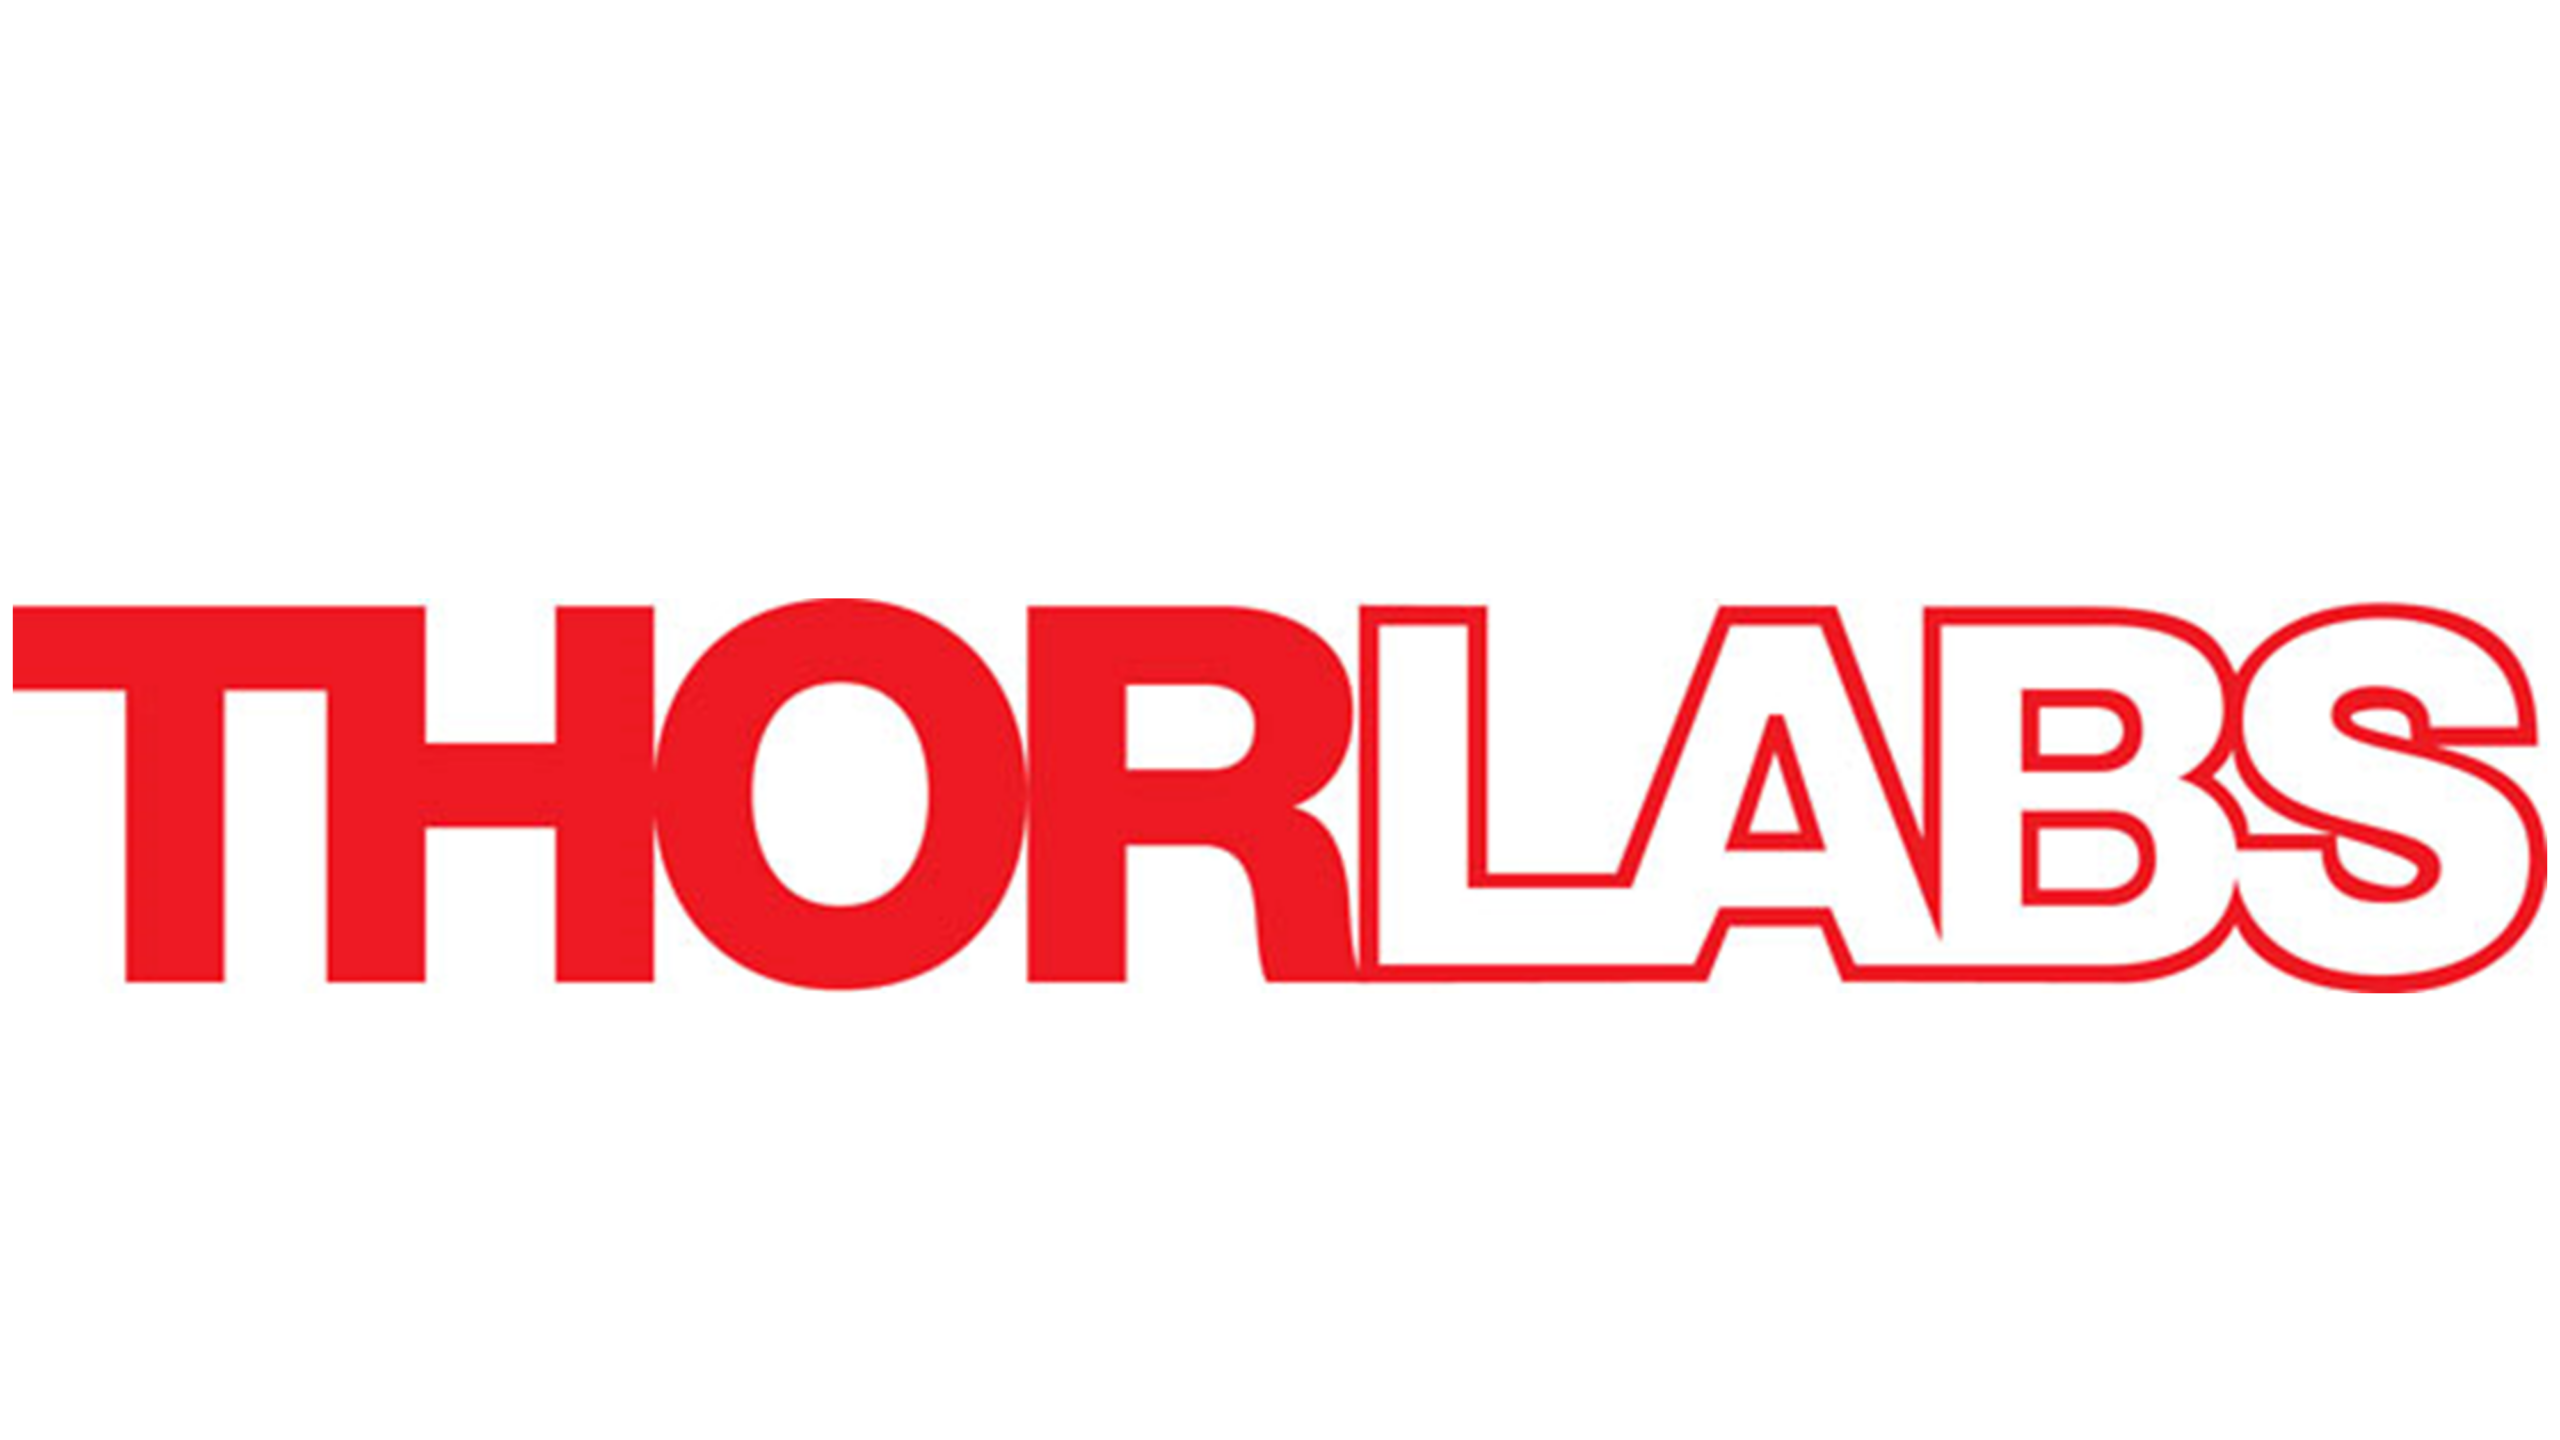 Thorlabs logo